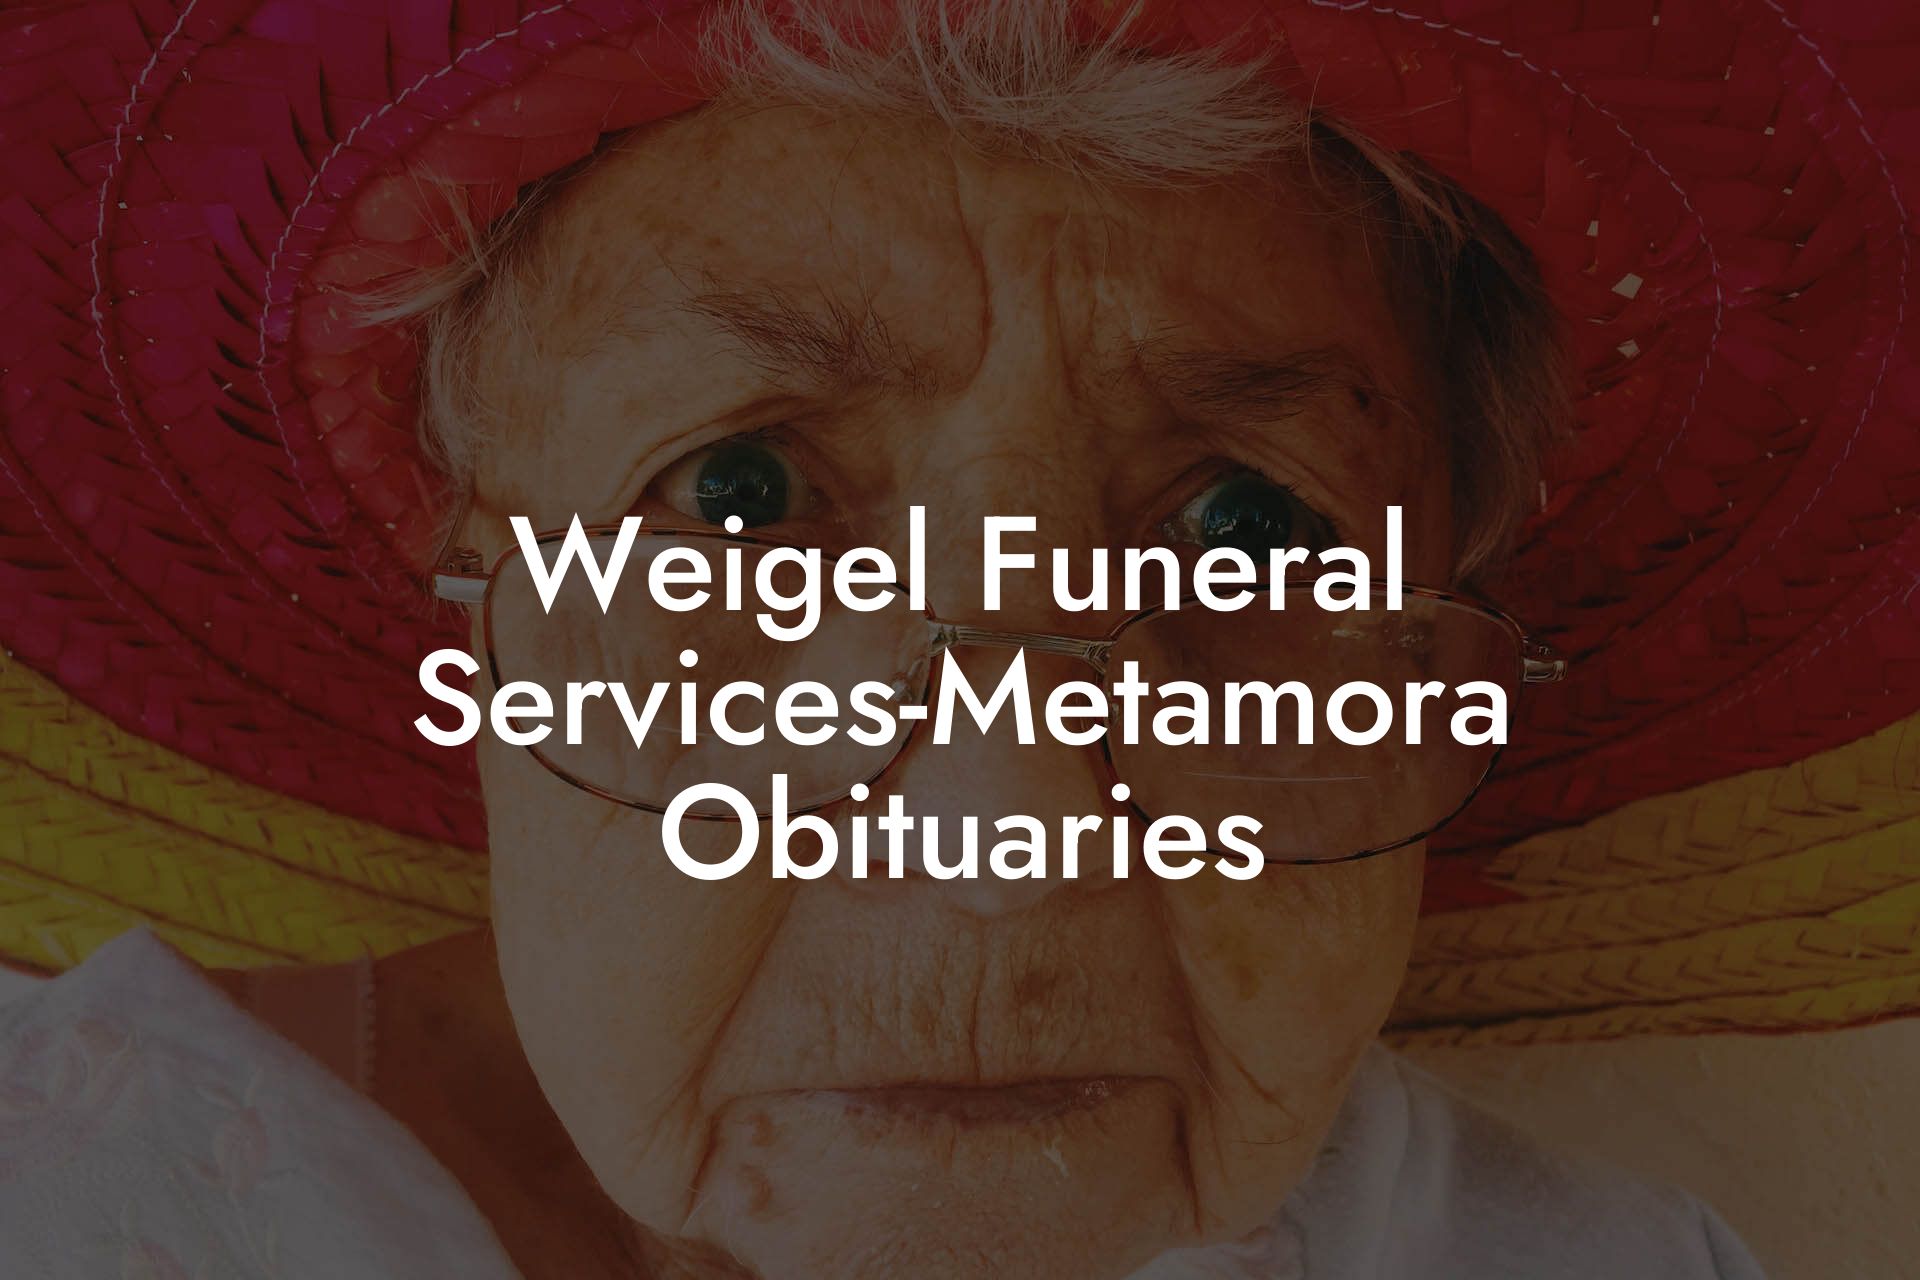 Weigel Funeral Services-Metamora Obituaries